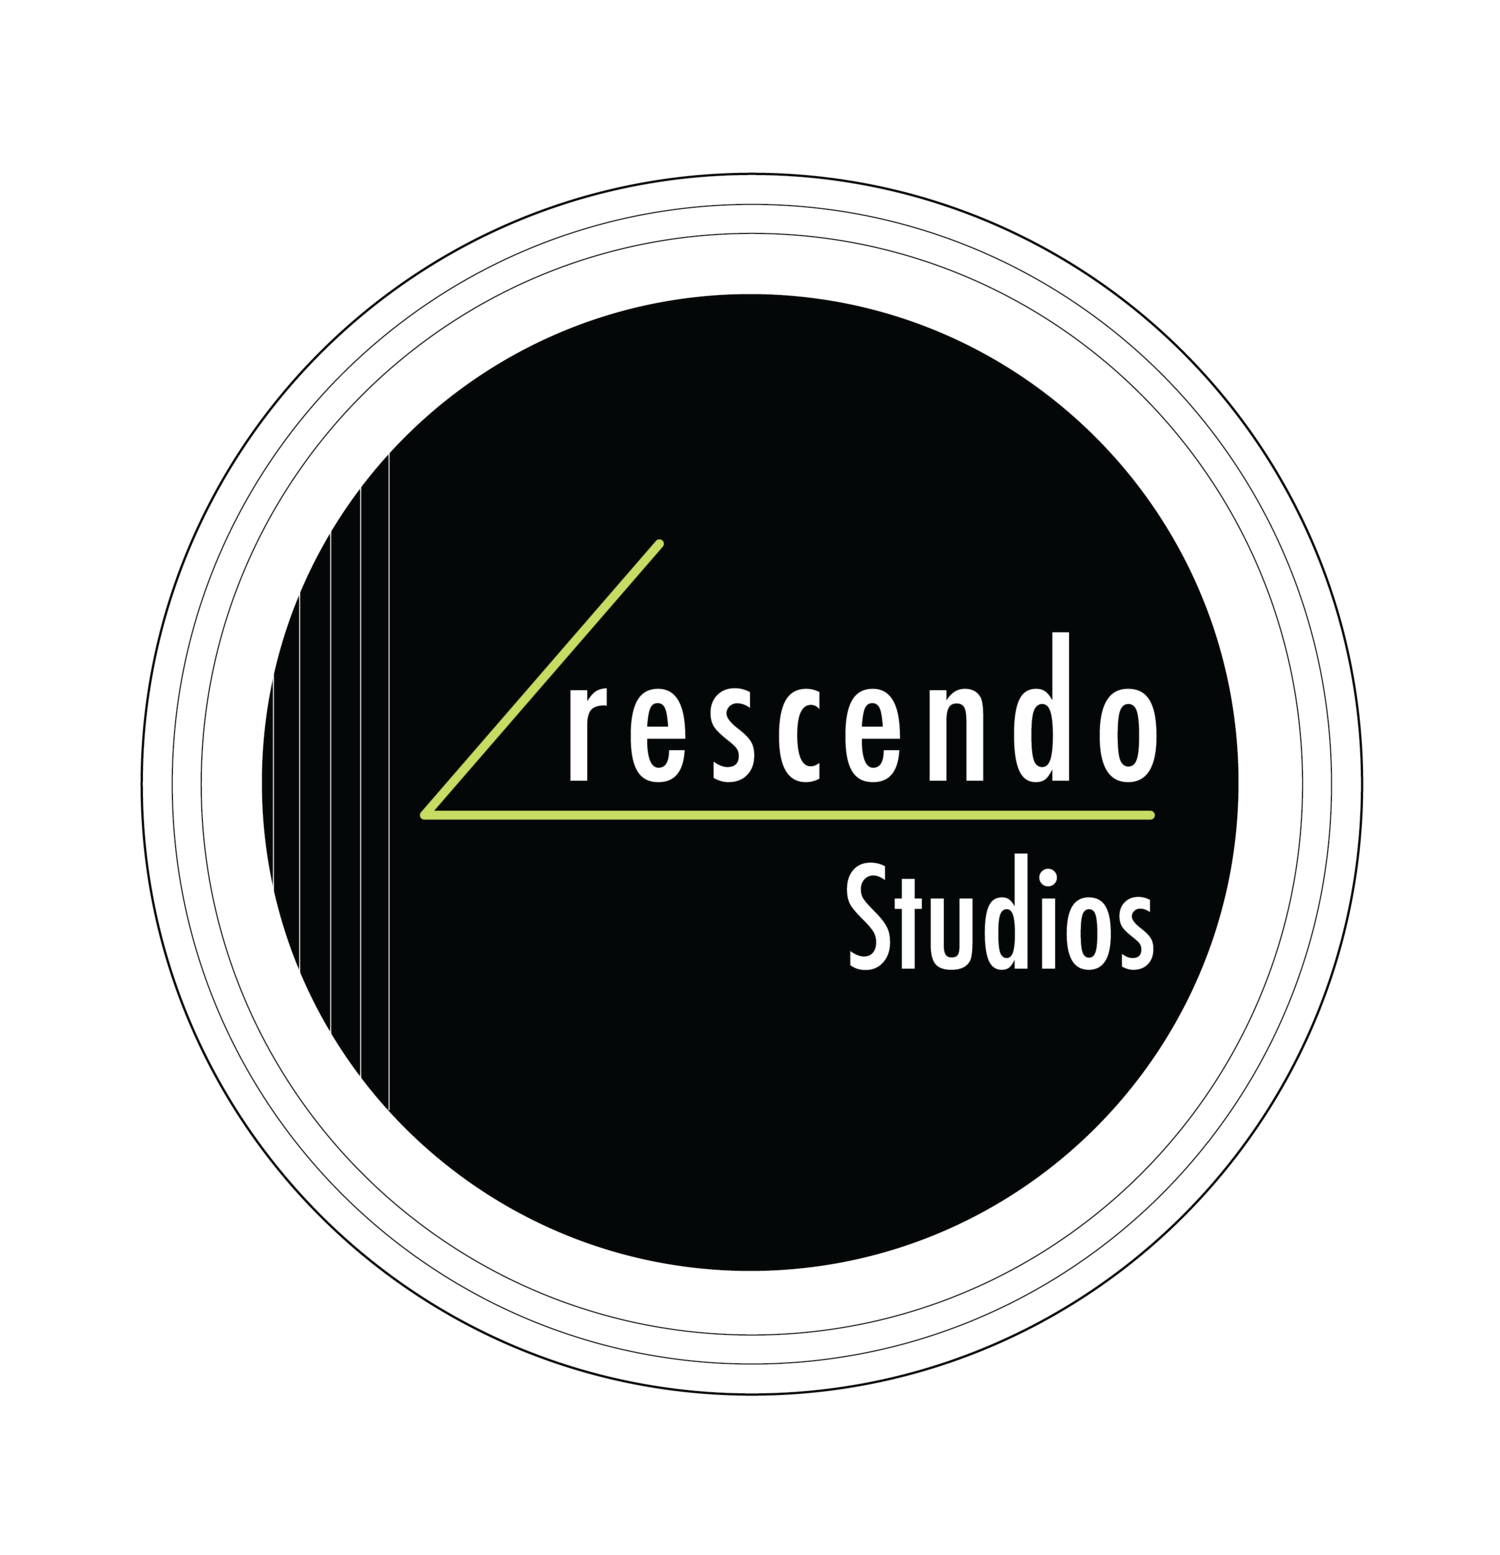 Crescendo Studios